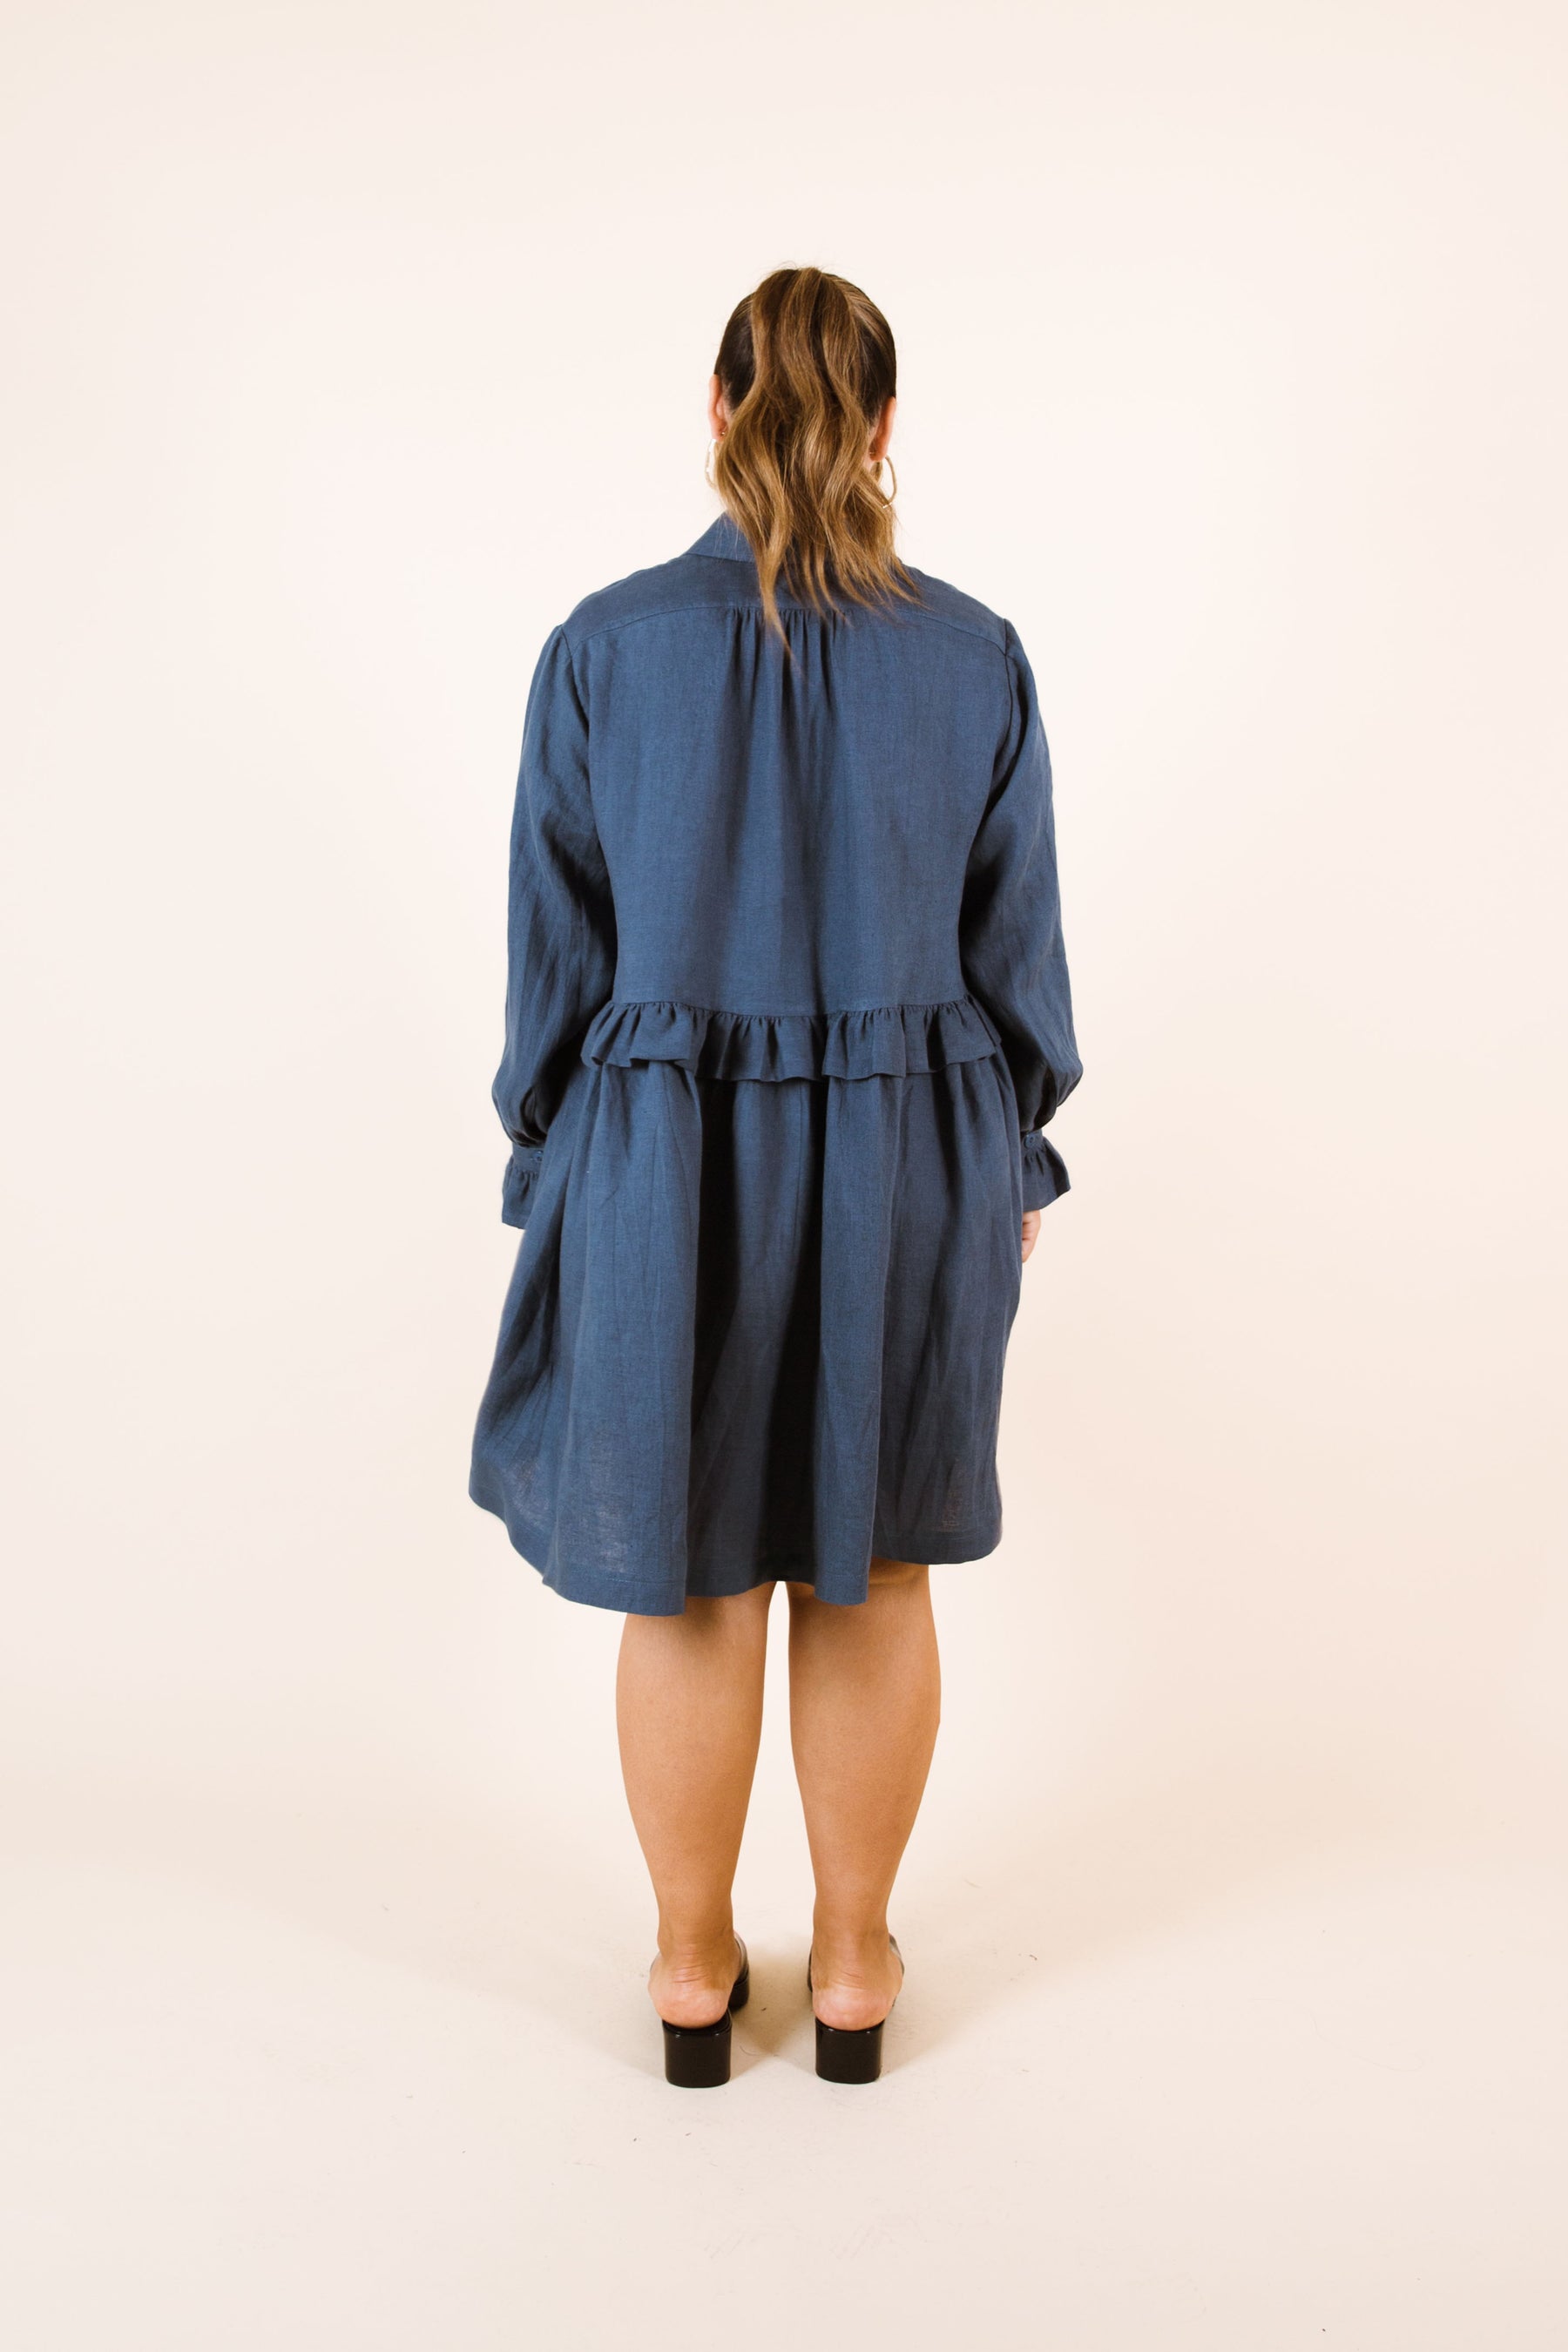 Ashling Blouse / Dress - Size 1-14